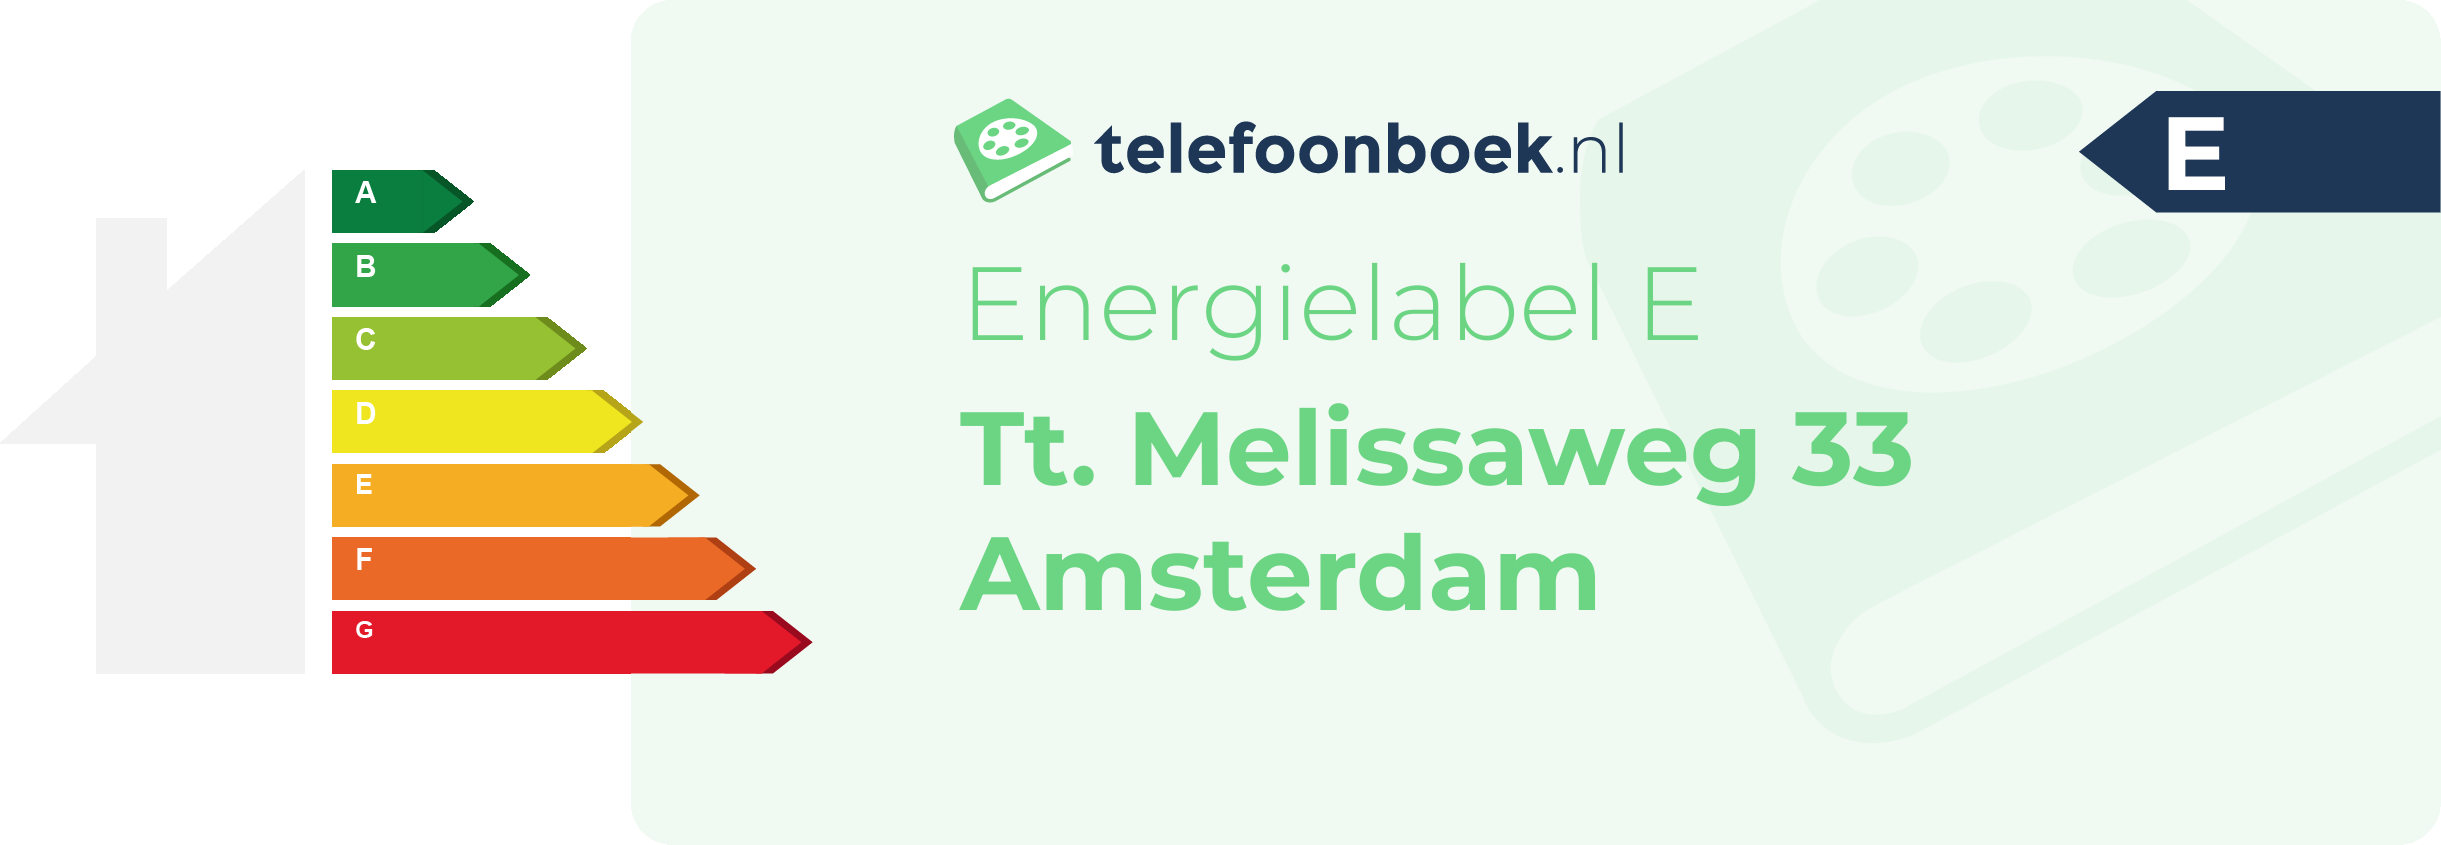 Energielabel Tt. Melissaweg 33 Amsterdam